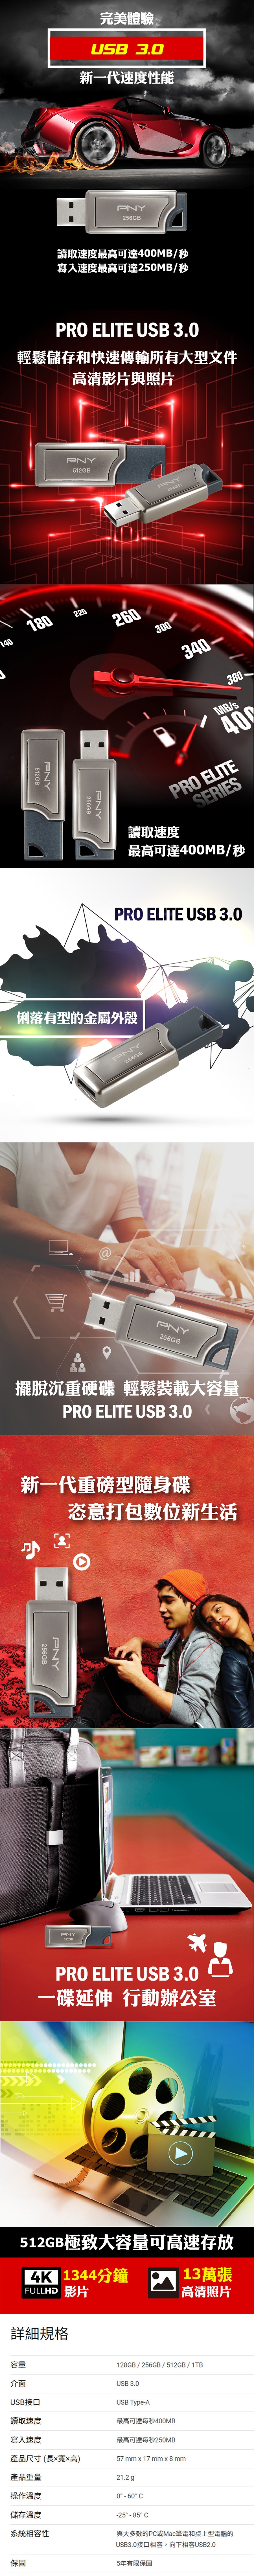 PNY USB3.0 128GB Pro Elite 極速伸縮碟